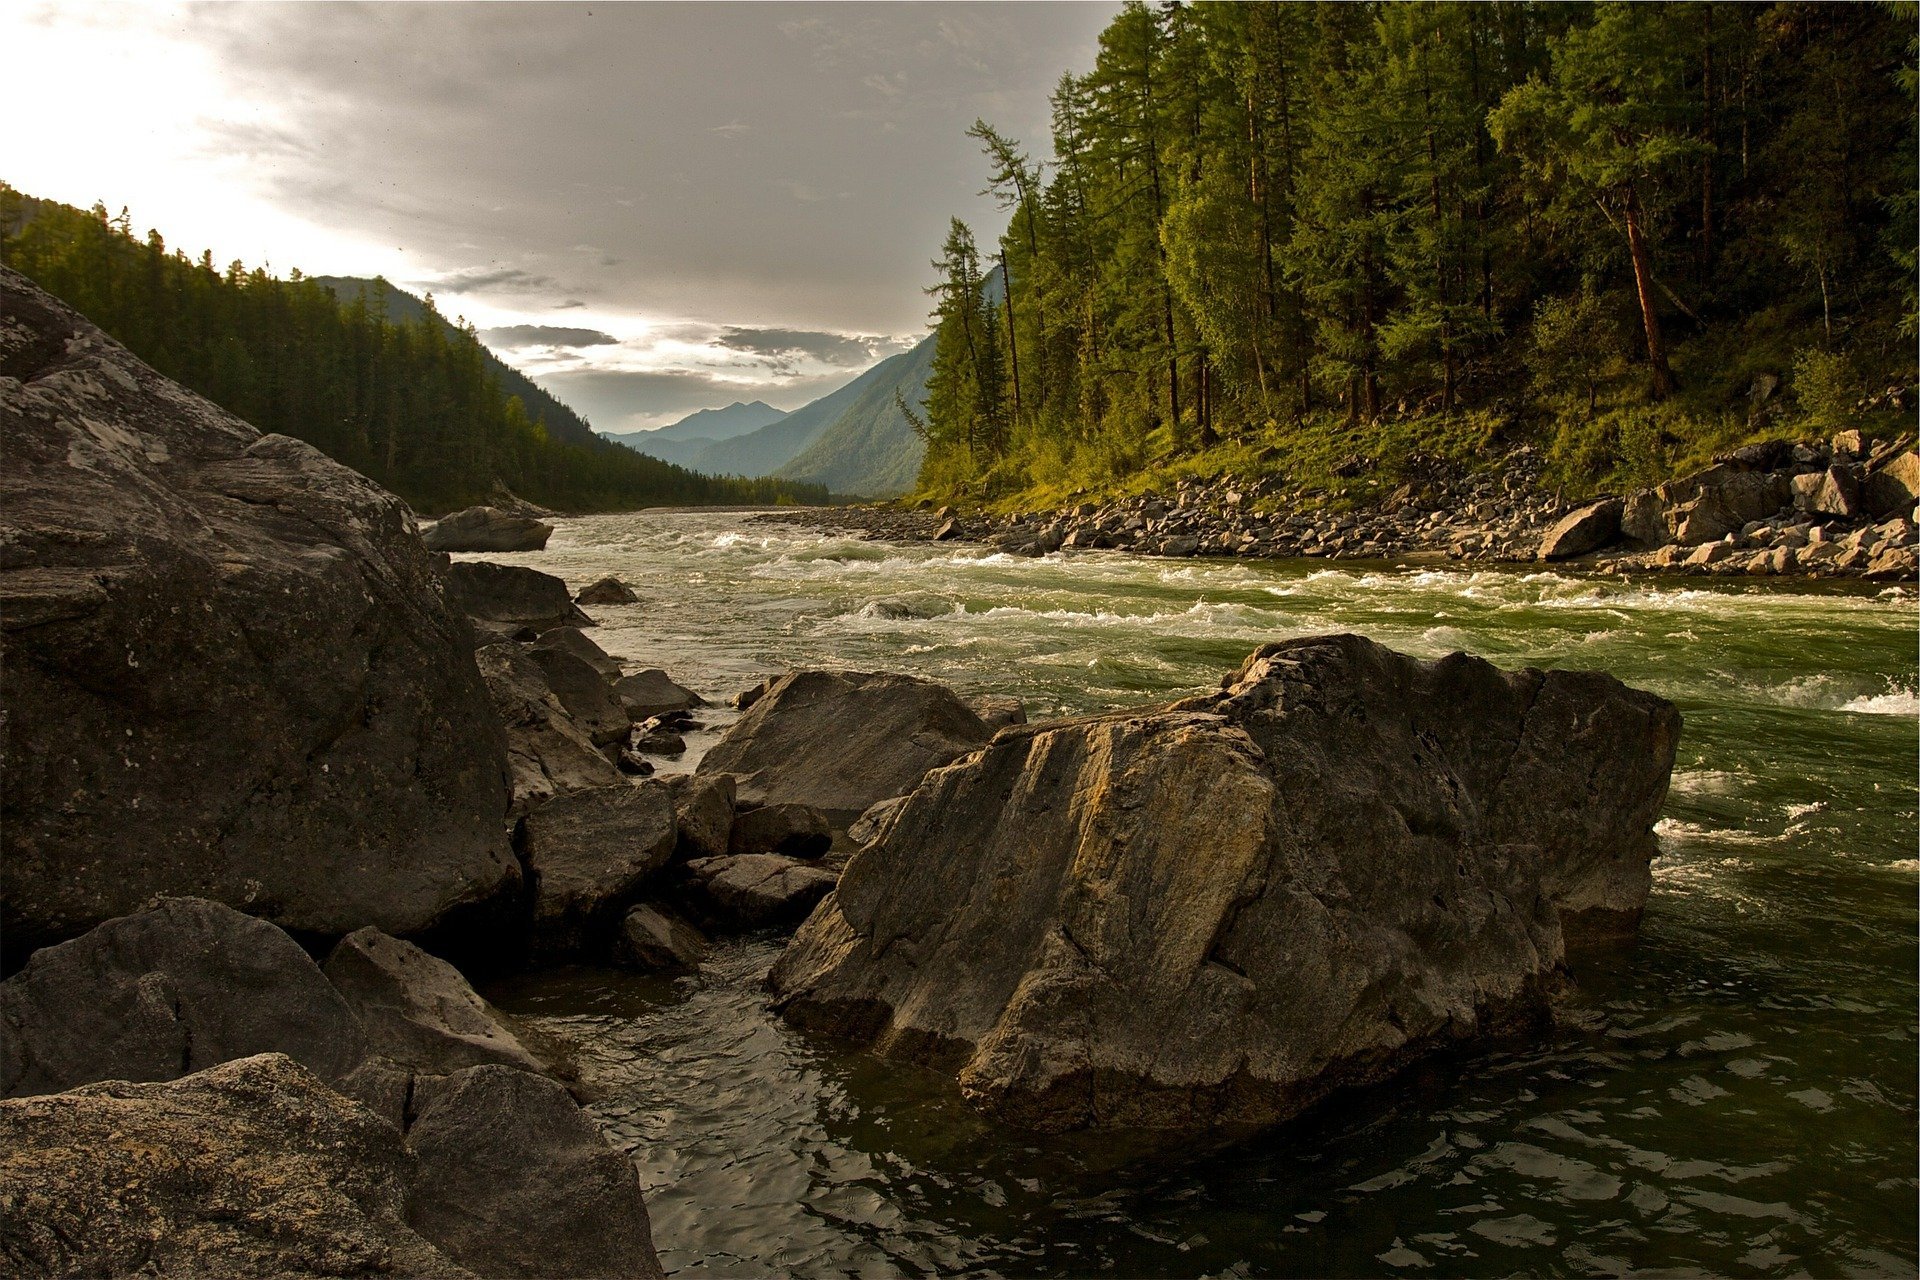 River stream and rocks | Source: Pixabay